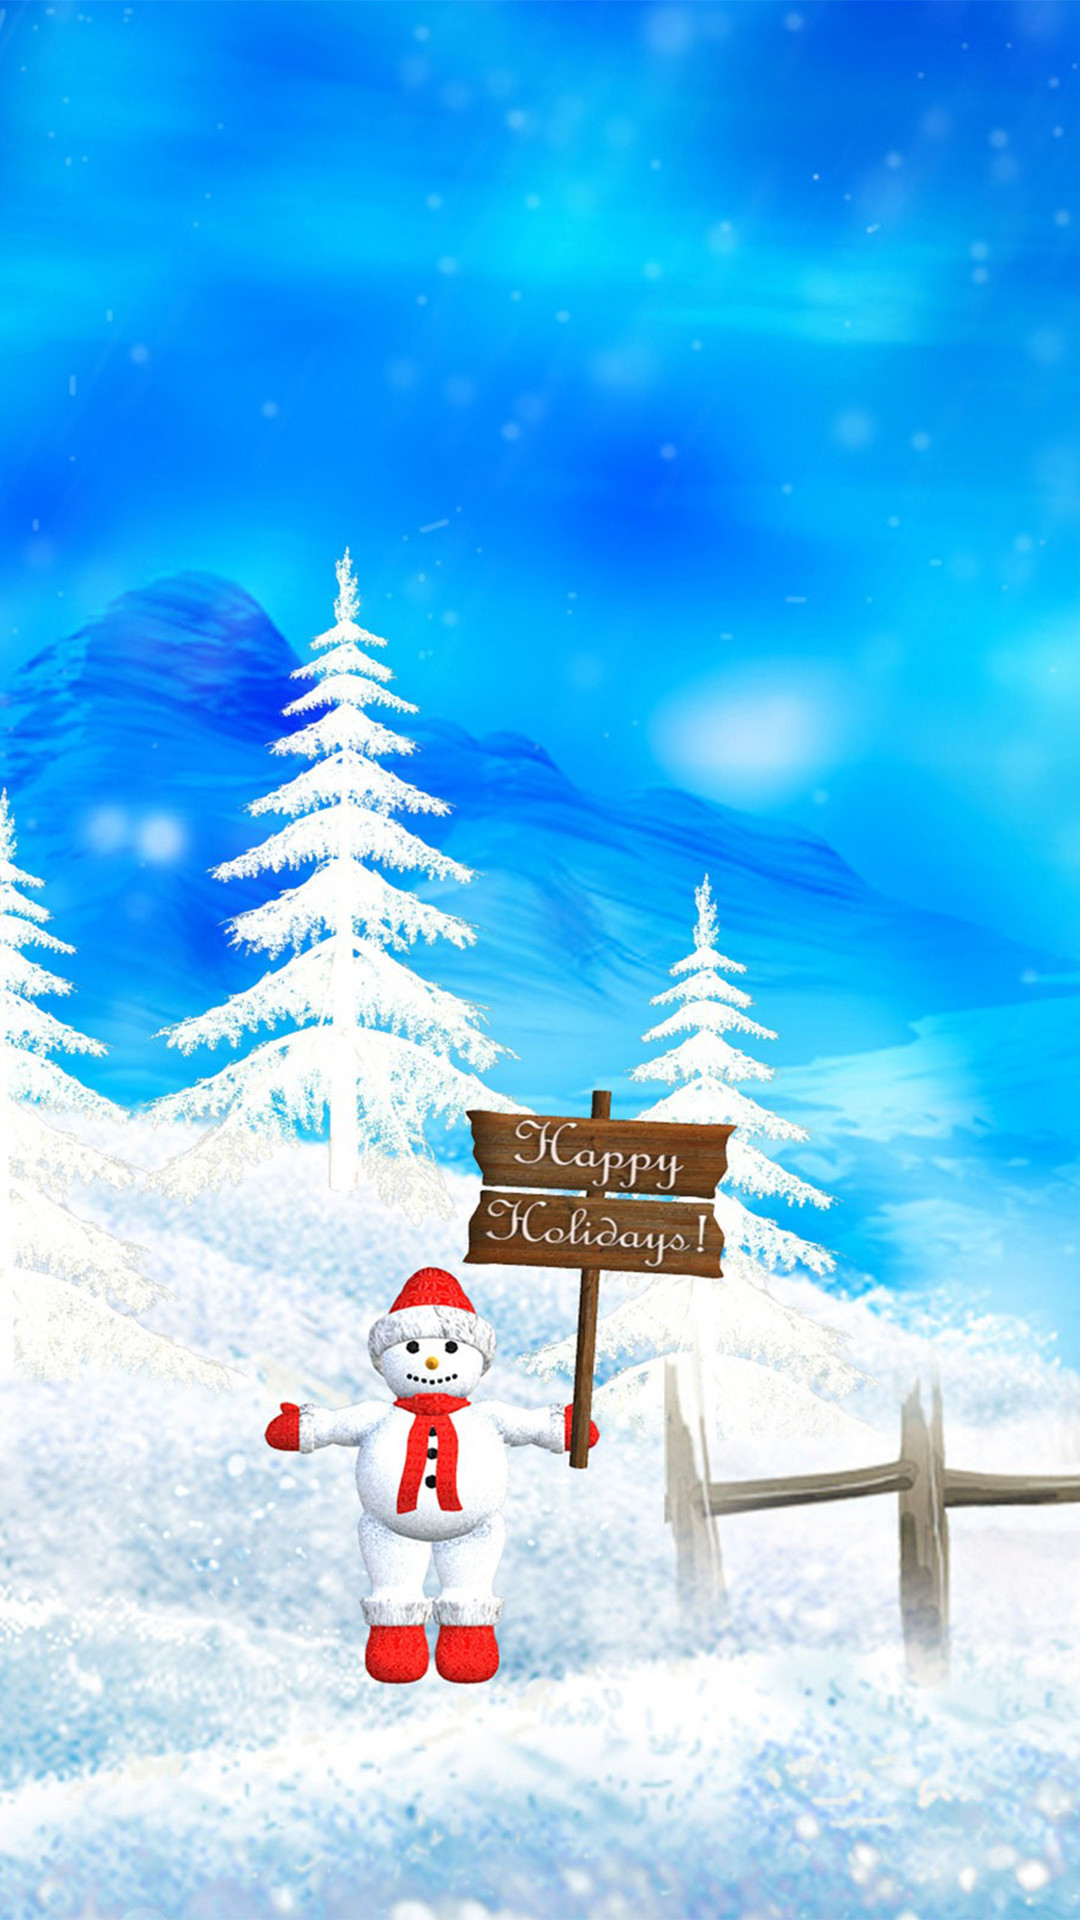 1080x1920 Snowman-Christmas-Wallpaper-iphone-6-Plus-by-Blackberyy-